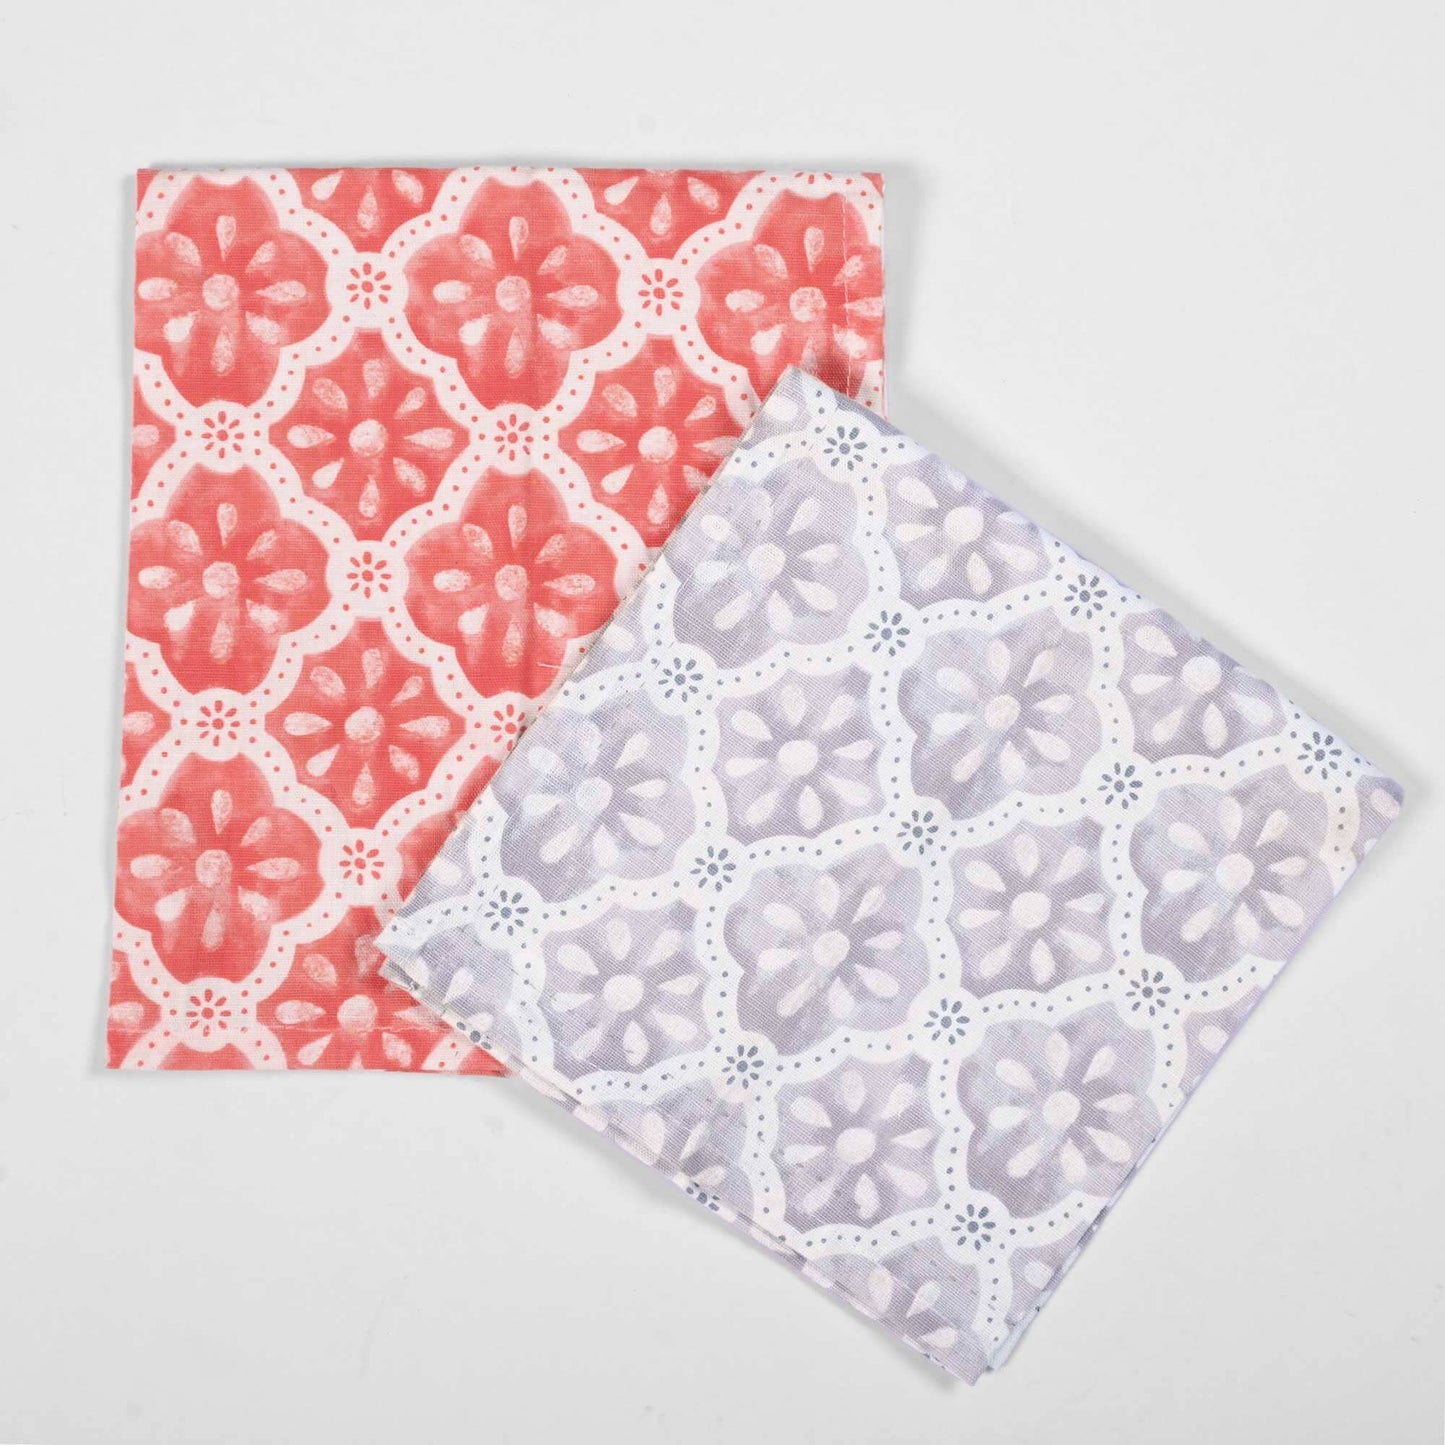 Hermel Towelette Cloth Napkin - Pack of 2 Home Supplies De Artistic Red & Grey 